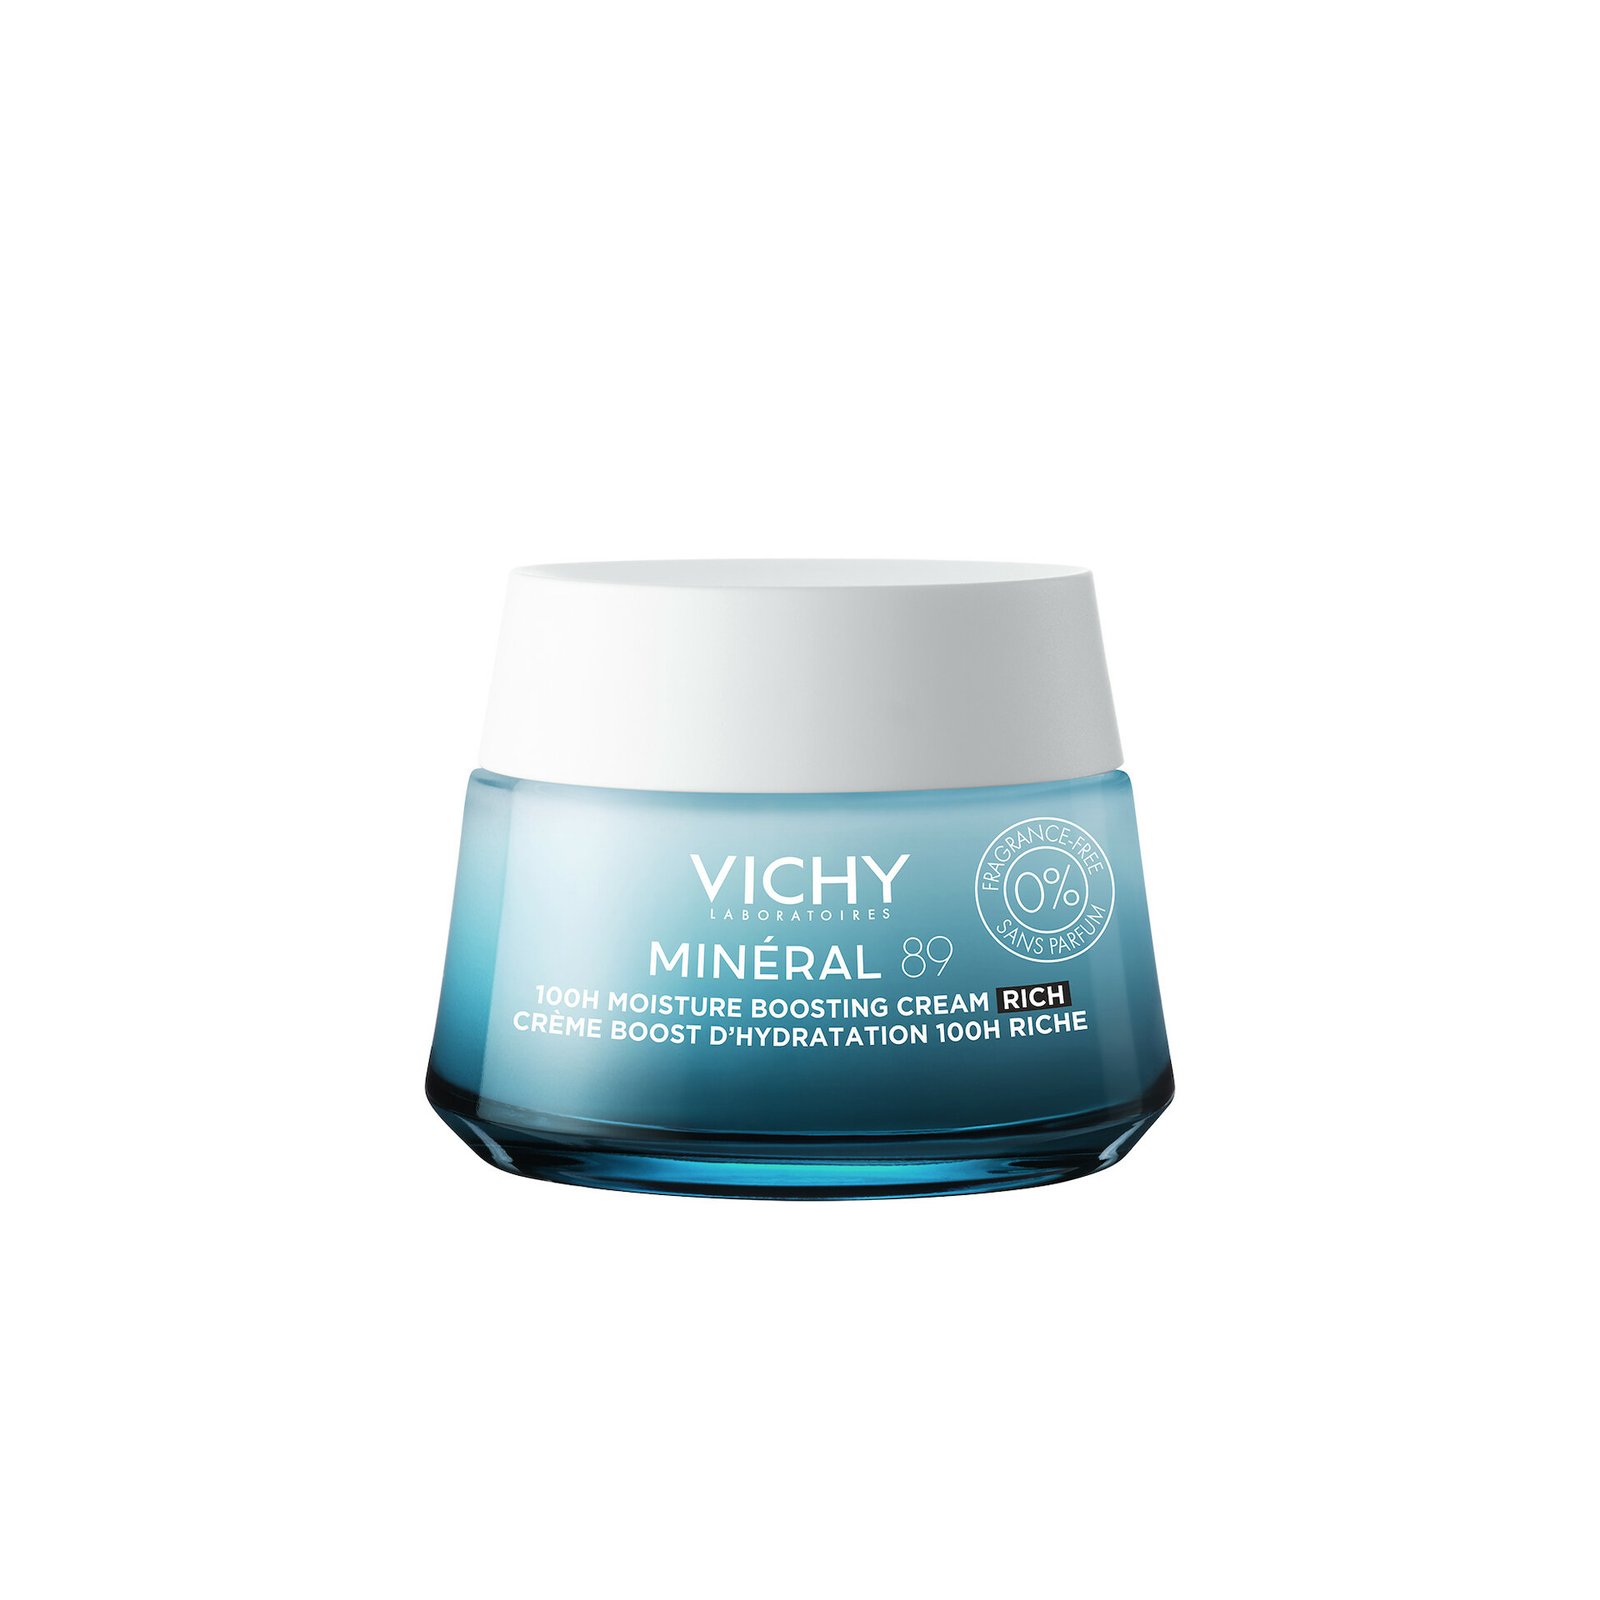 Vichy Minéral 89 100H Moisture Boosting Cream, Fragrance-free 50 ml